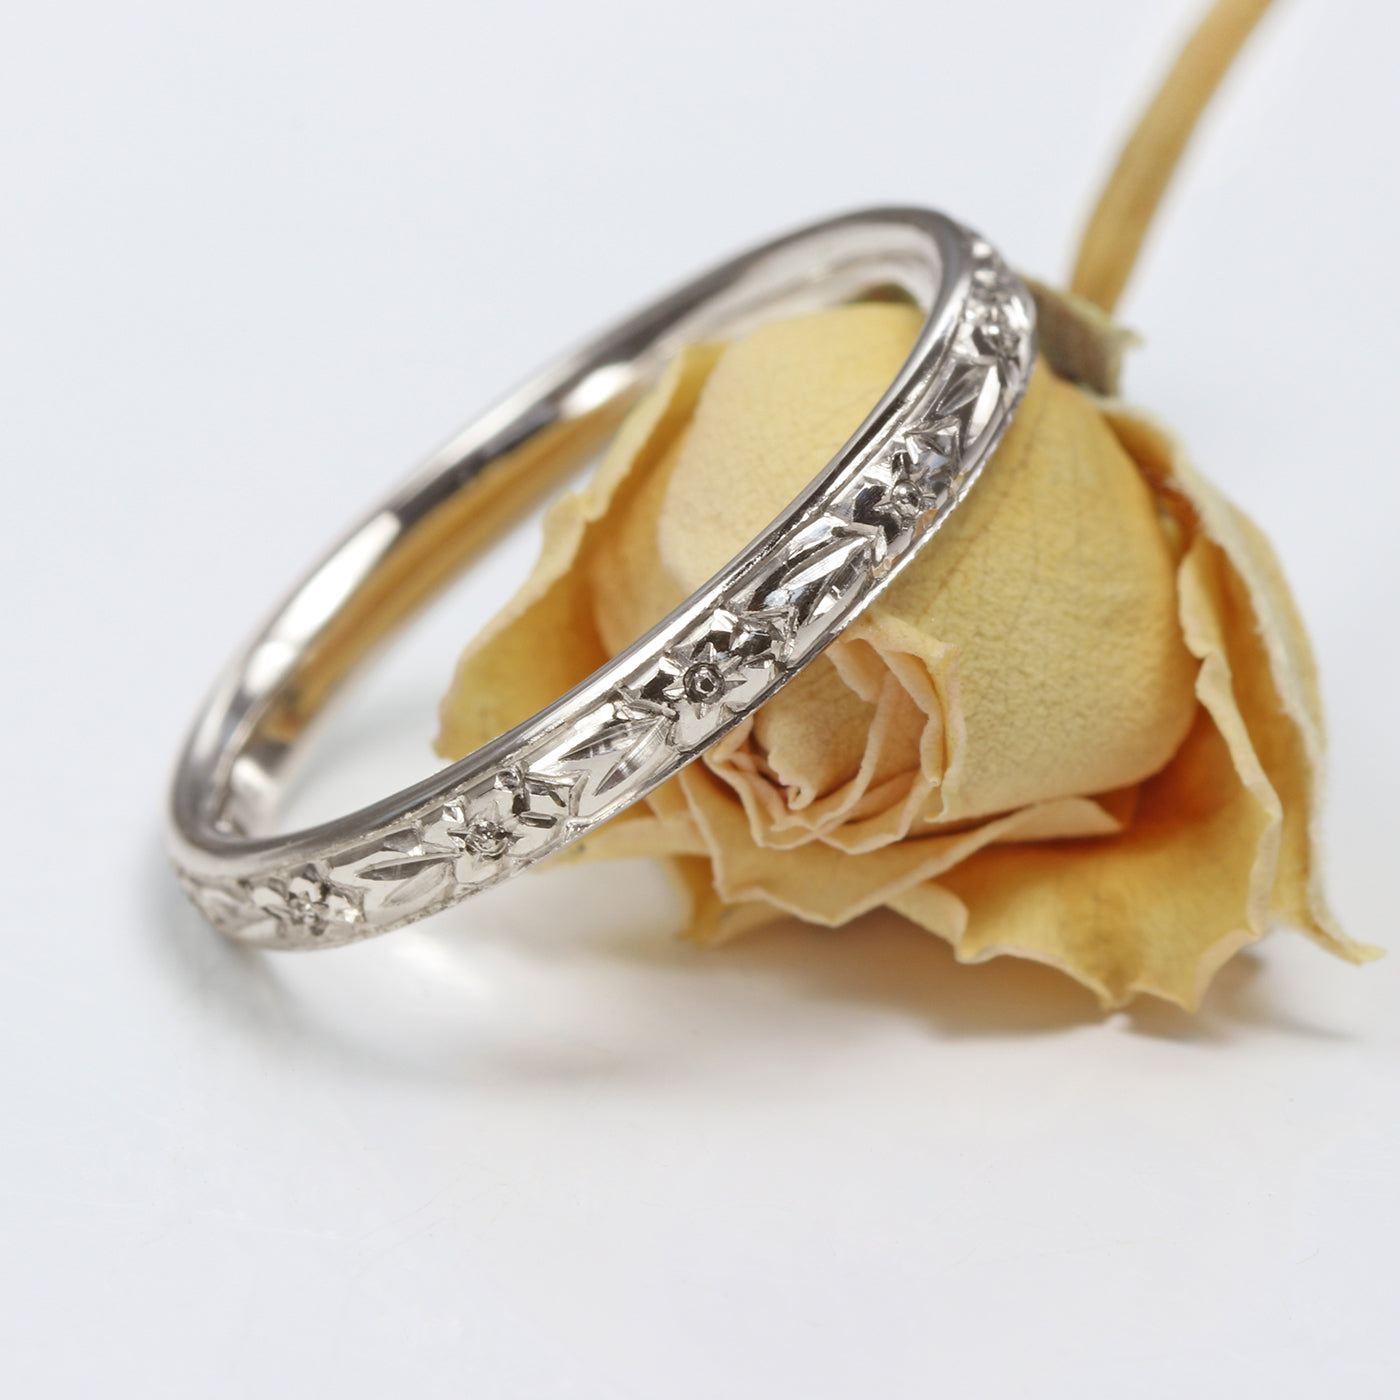 18ct White Gold Orange Blossom Engraved 2.5mm Comfort Fit Court Wedding Ring